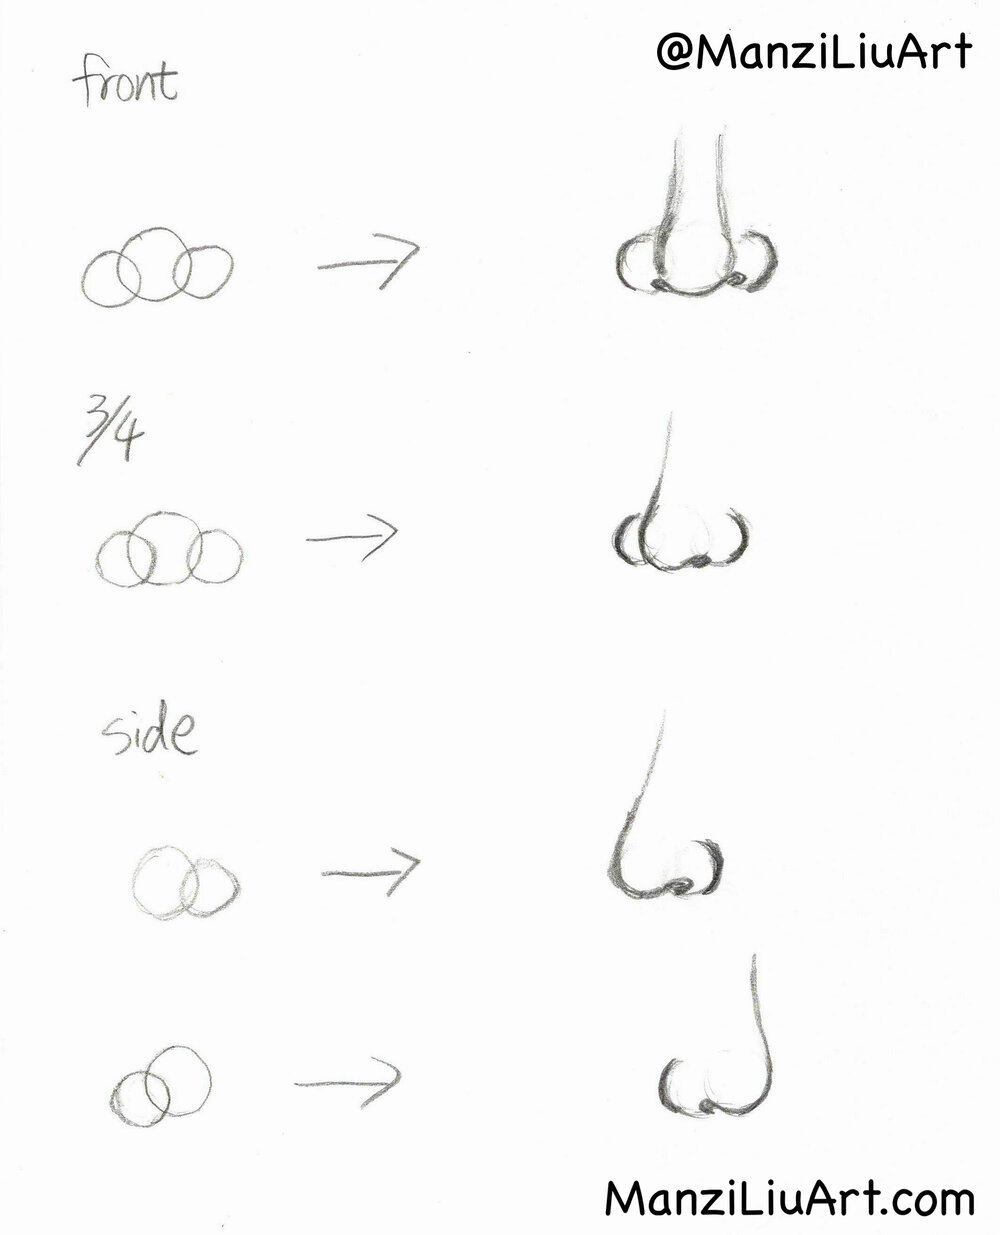 drawing nose